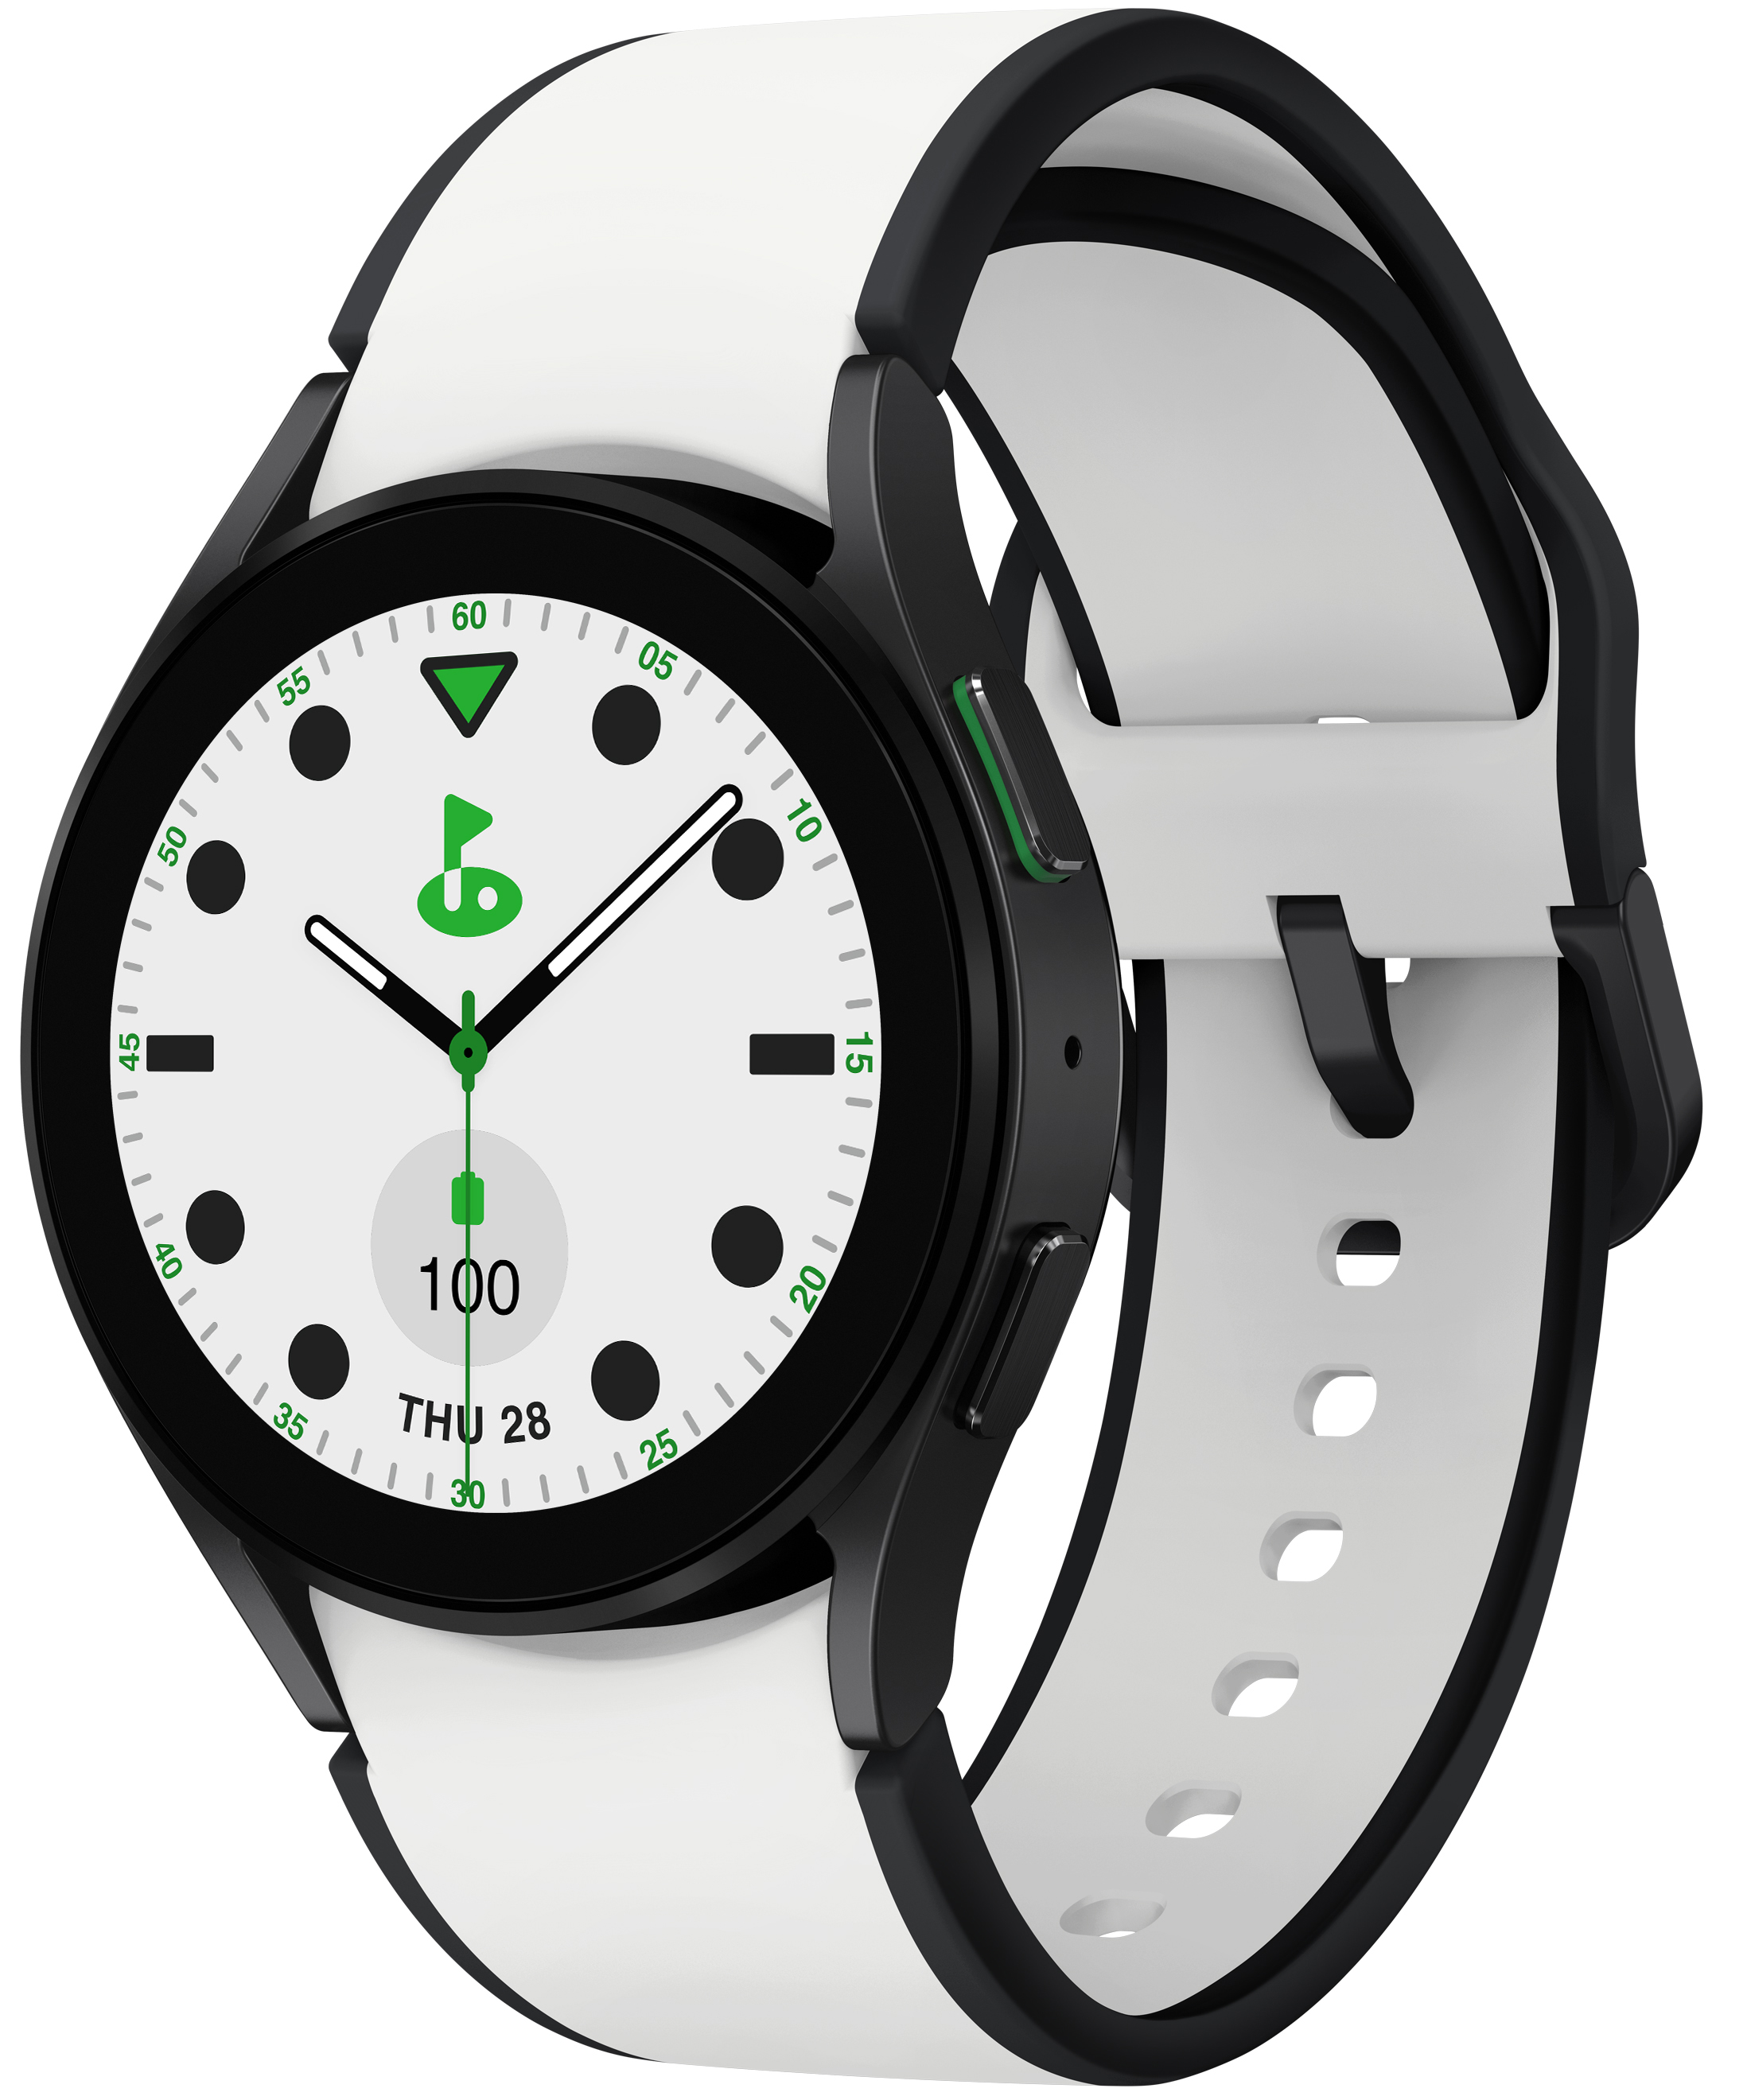 Samsung watch 5 отзывы. Часы самсунг галакси вотч 5 характеристики. Galaxy watch 5 44mm купить.